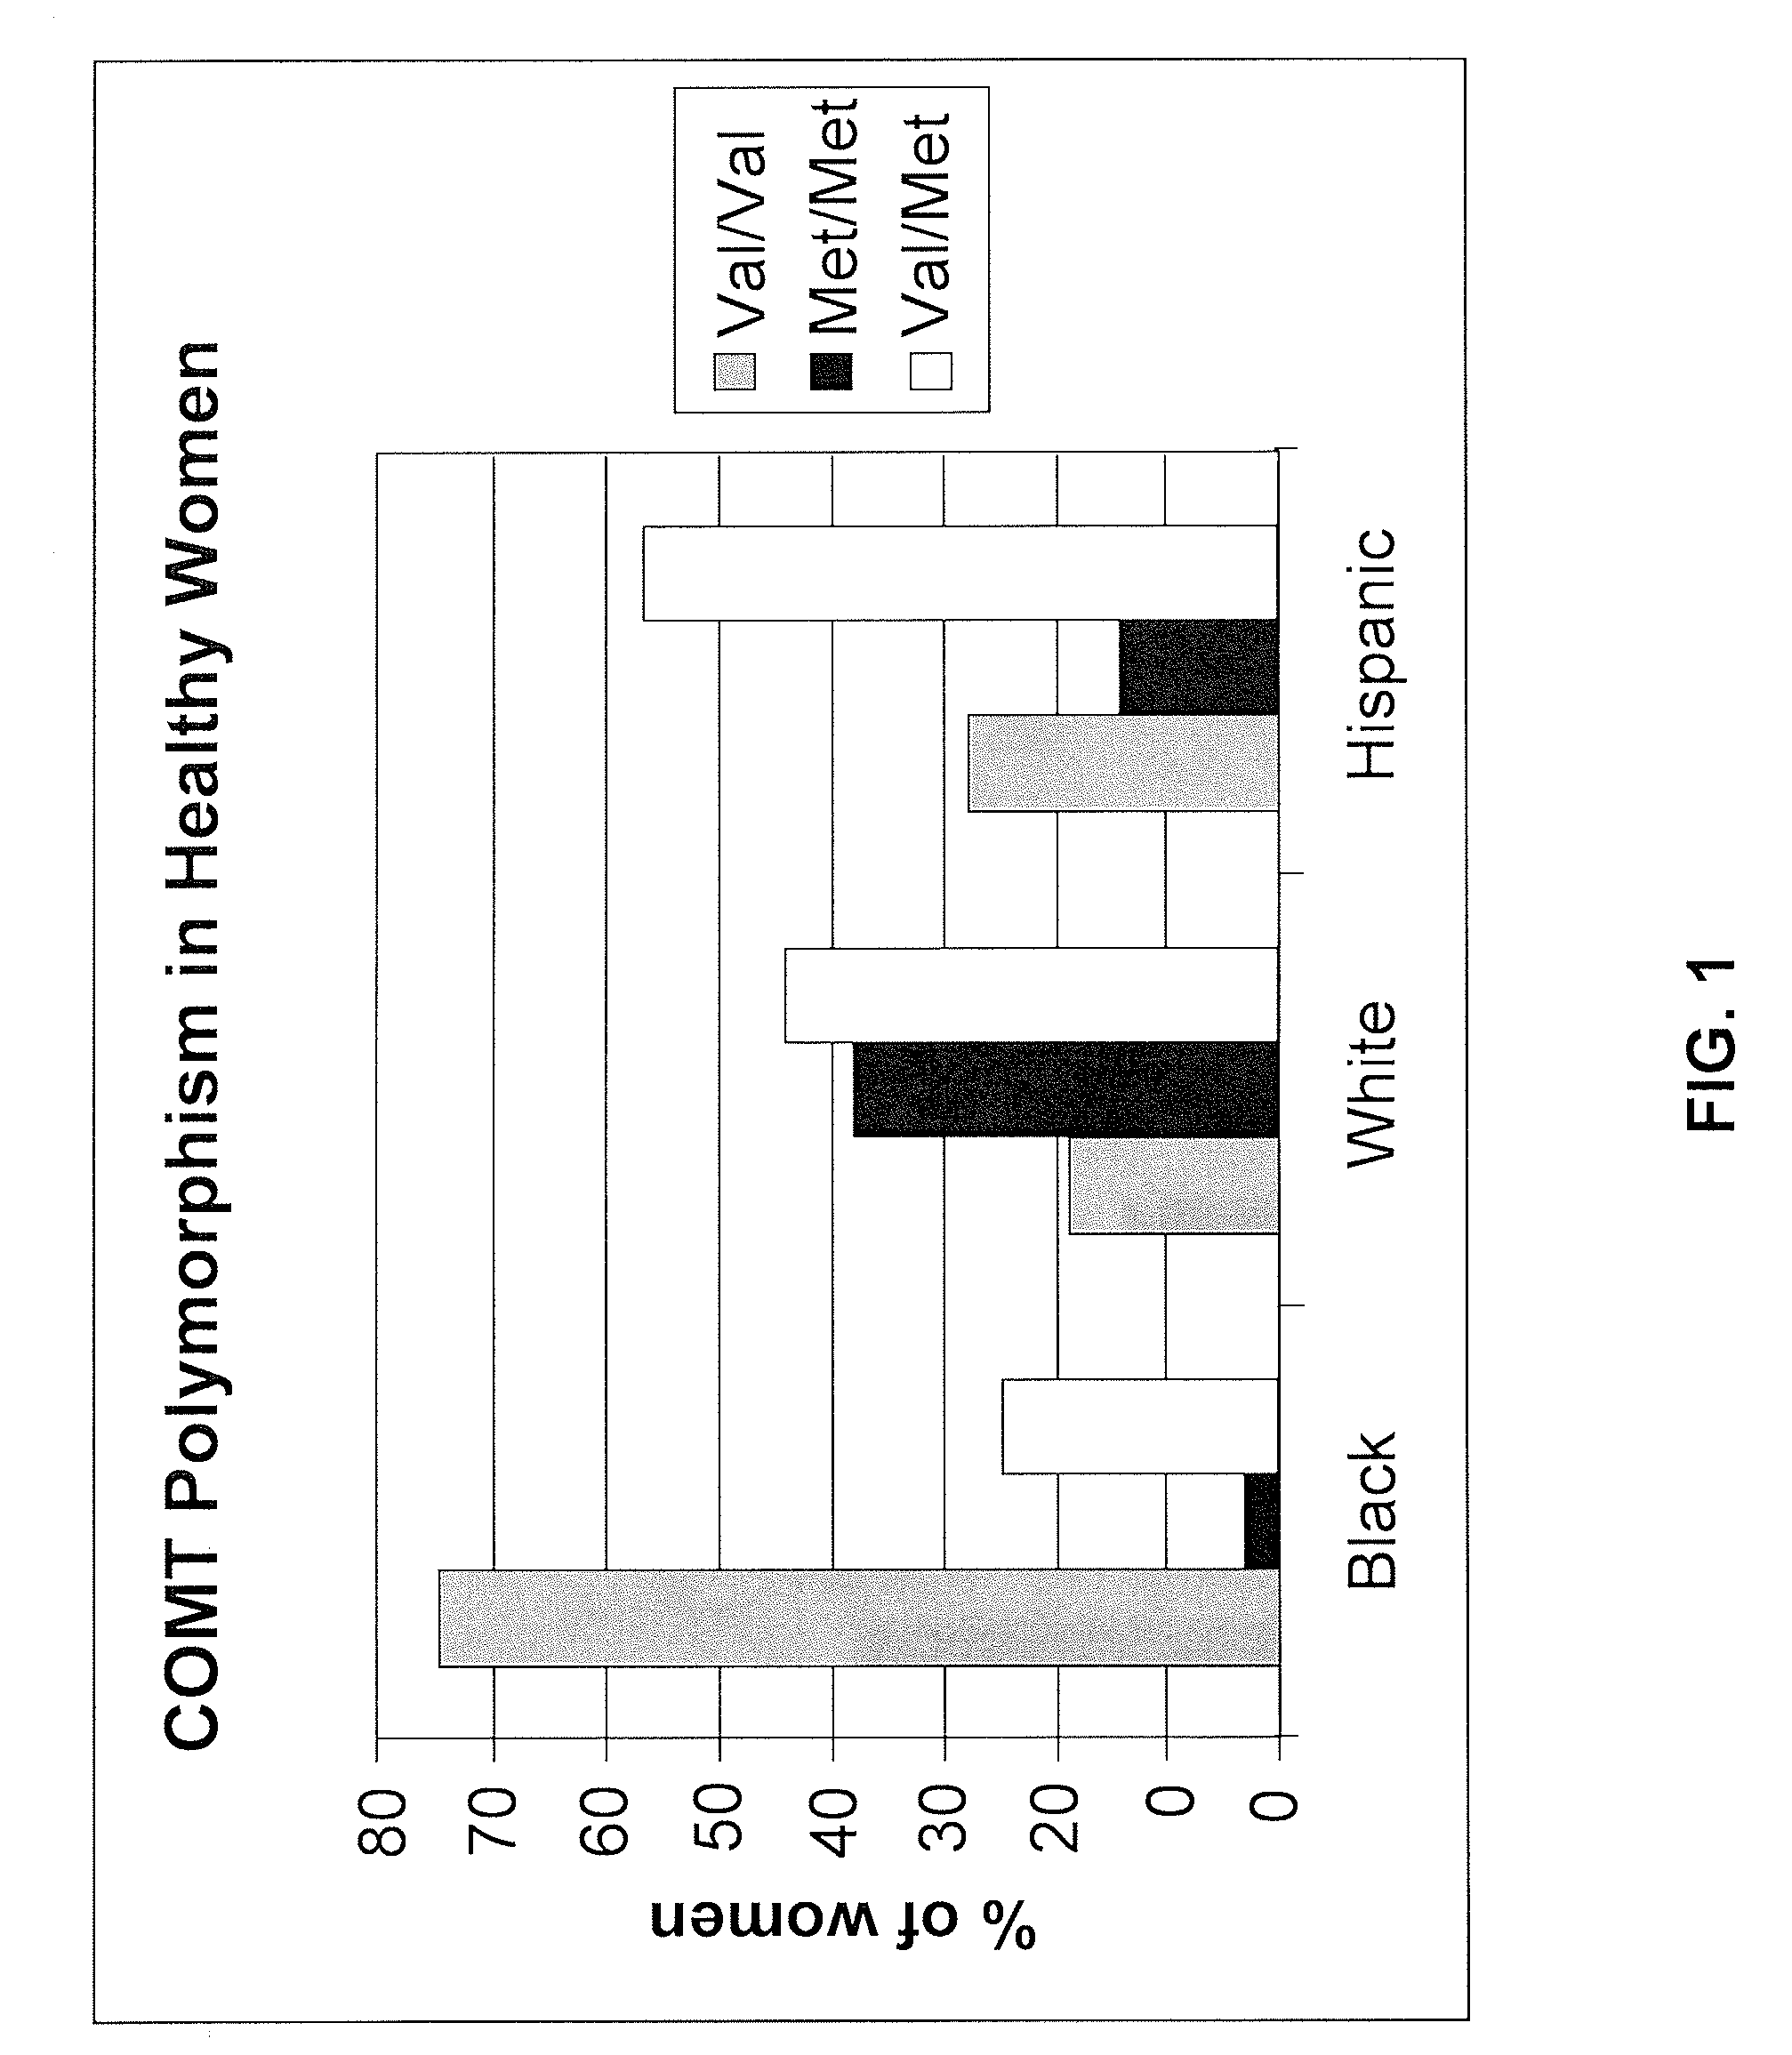 Methods of diagnosing leiomyoma by measuring catechol-O-methyltransferase